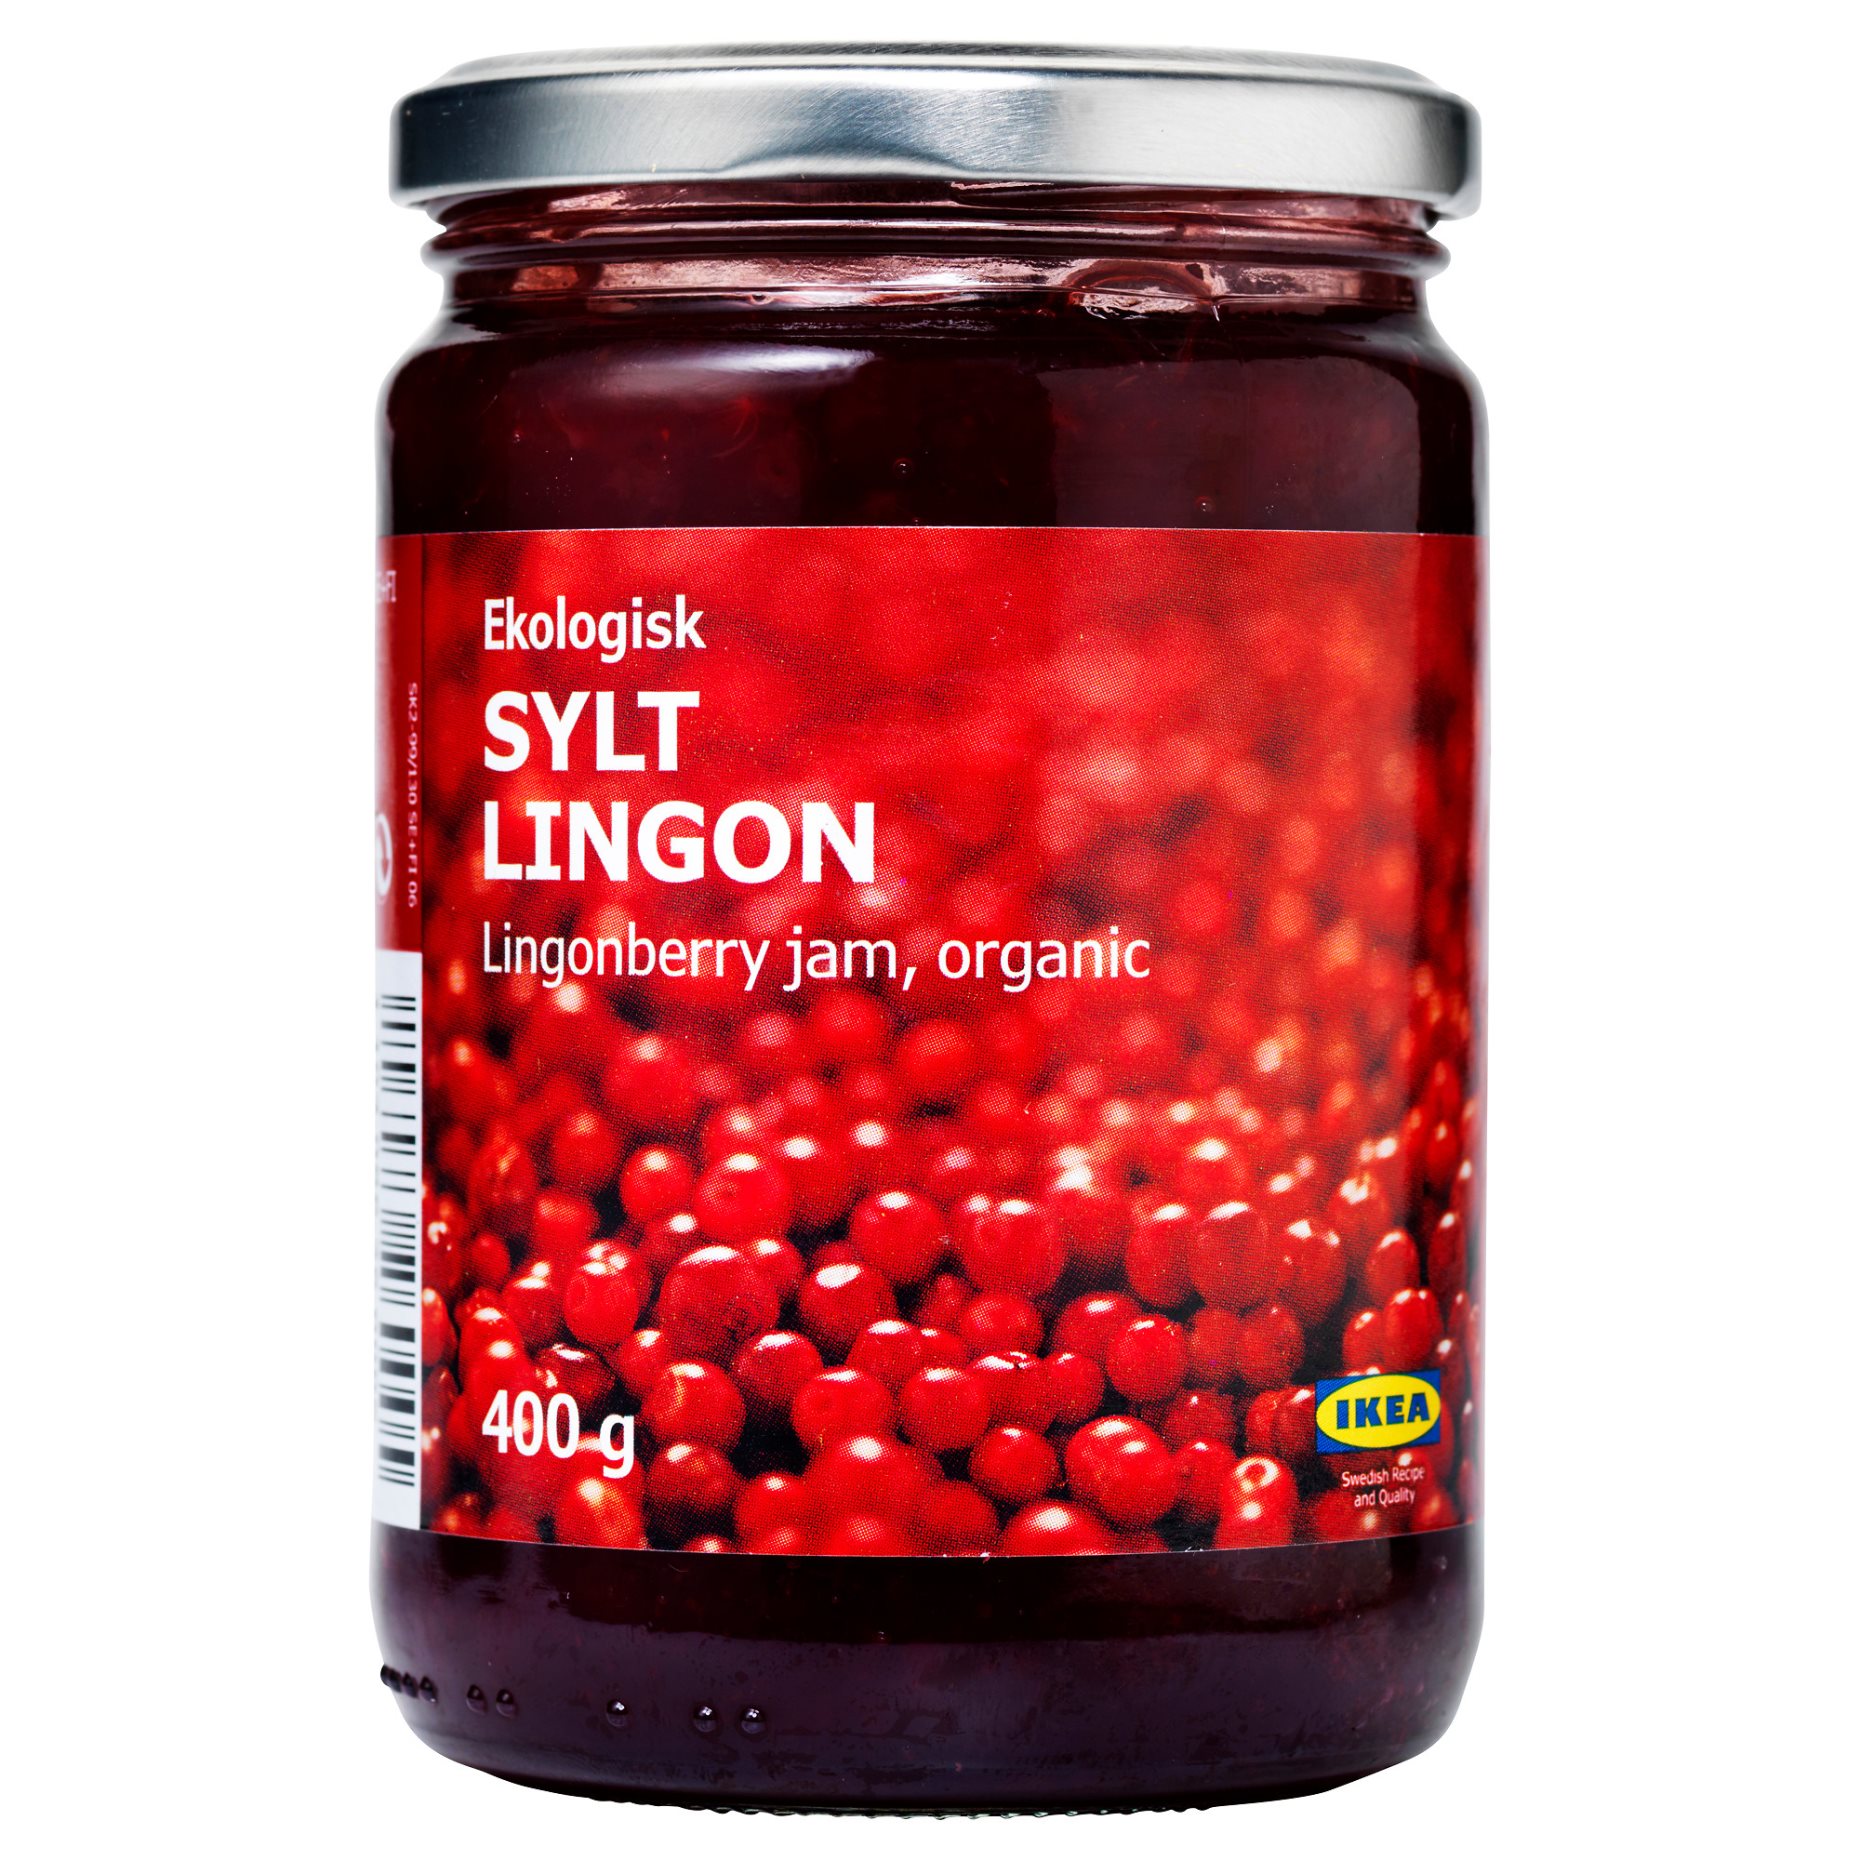 SYLT LINGON, lingonberry jam organic, 400 g, 103.086.26